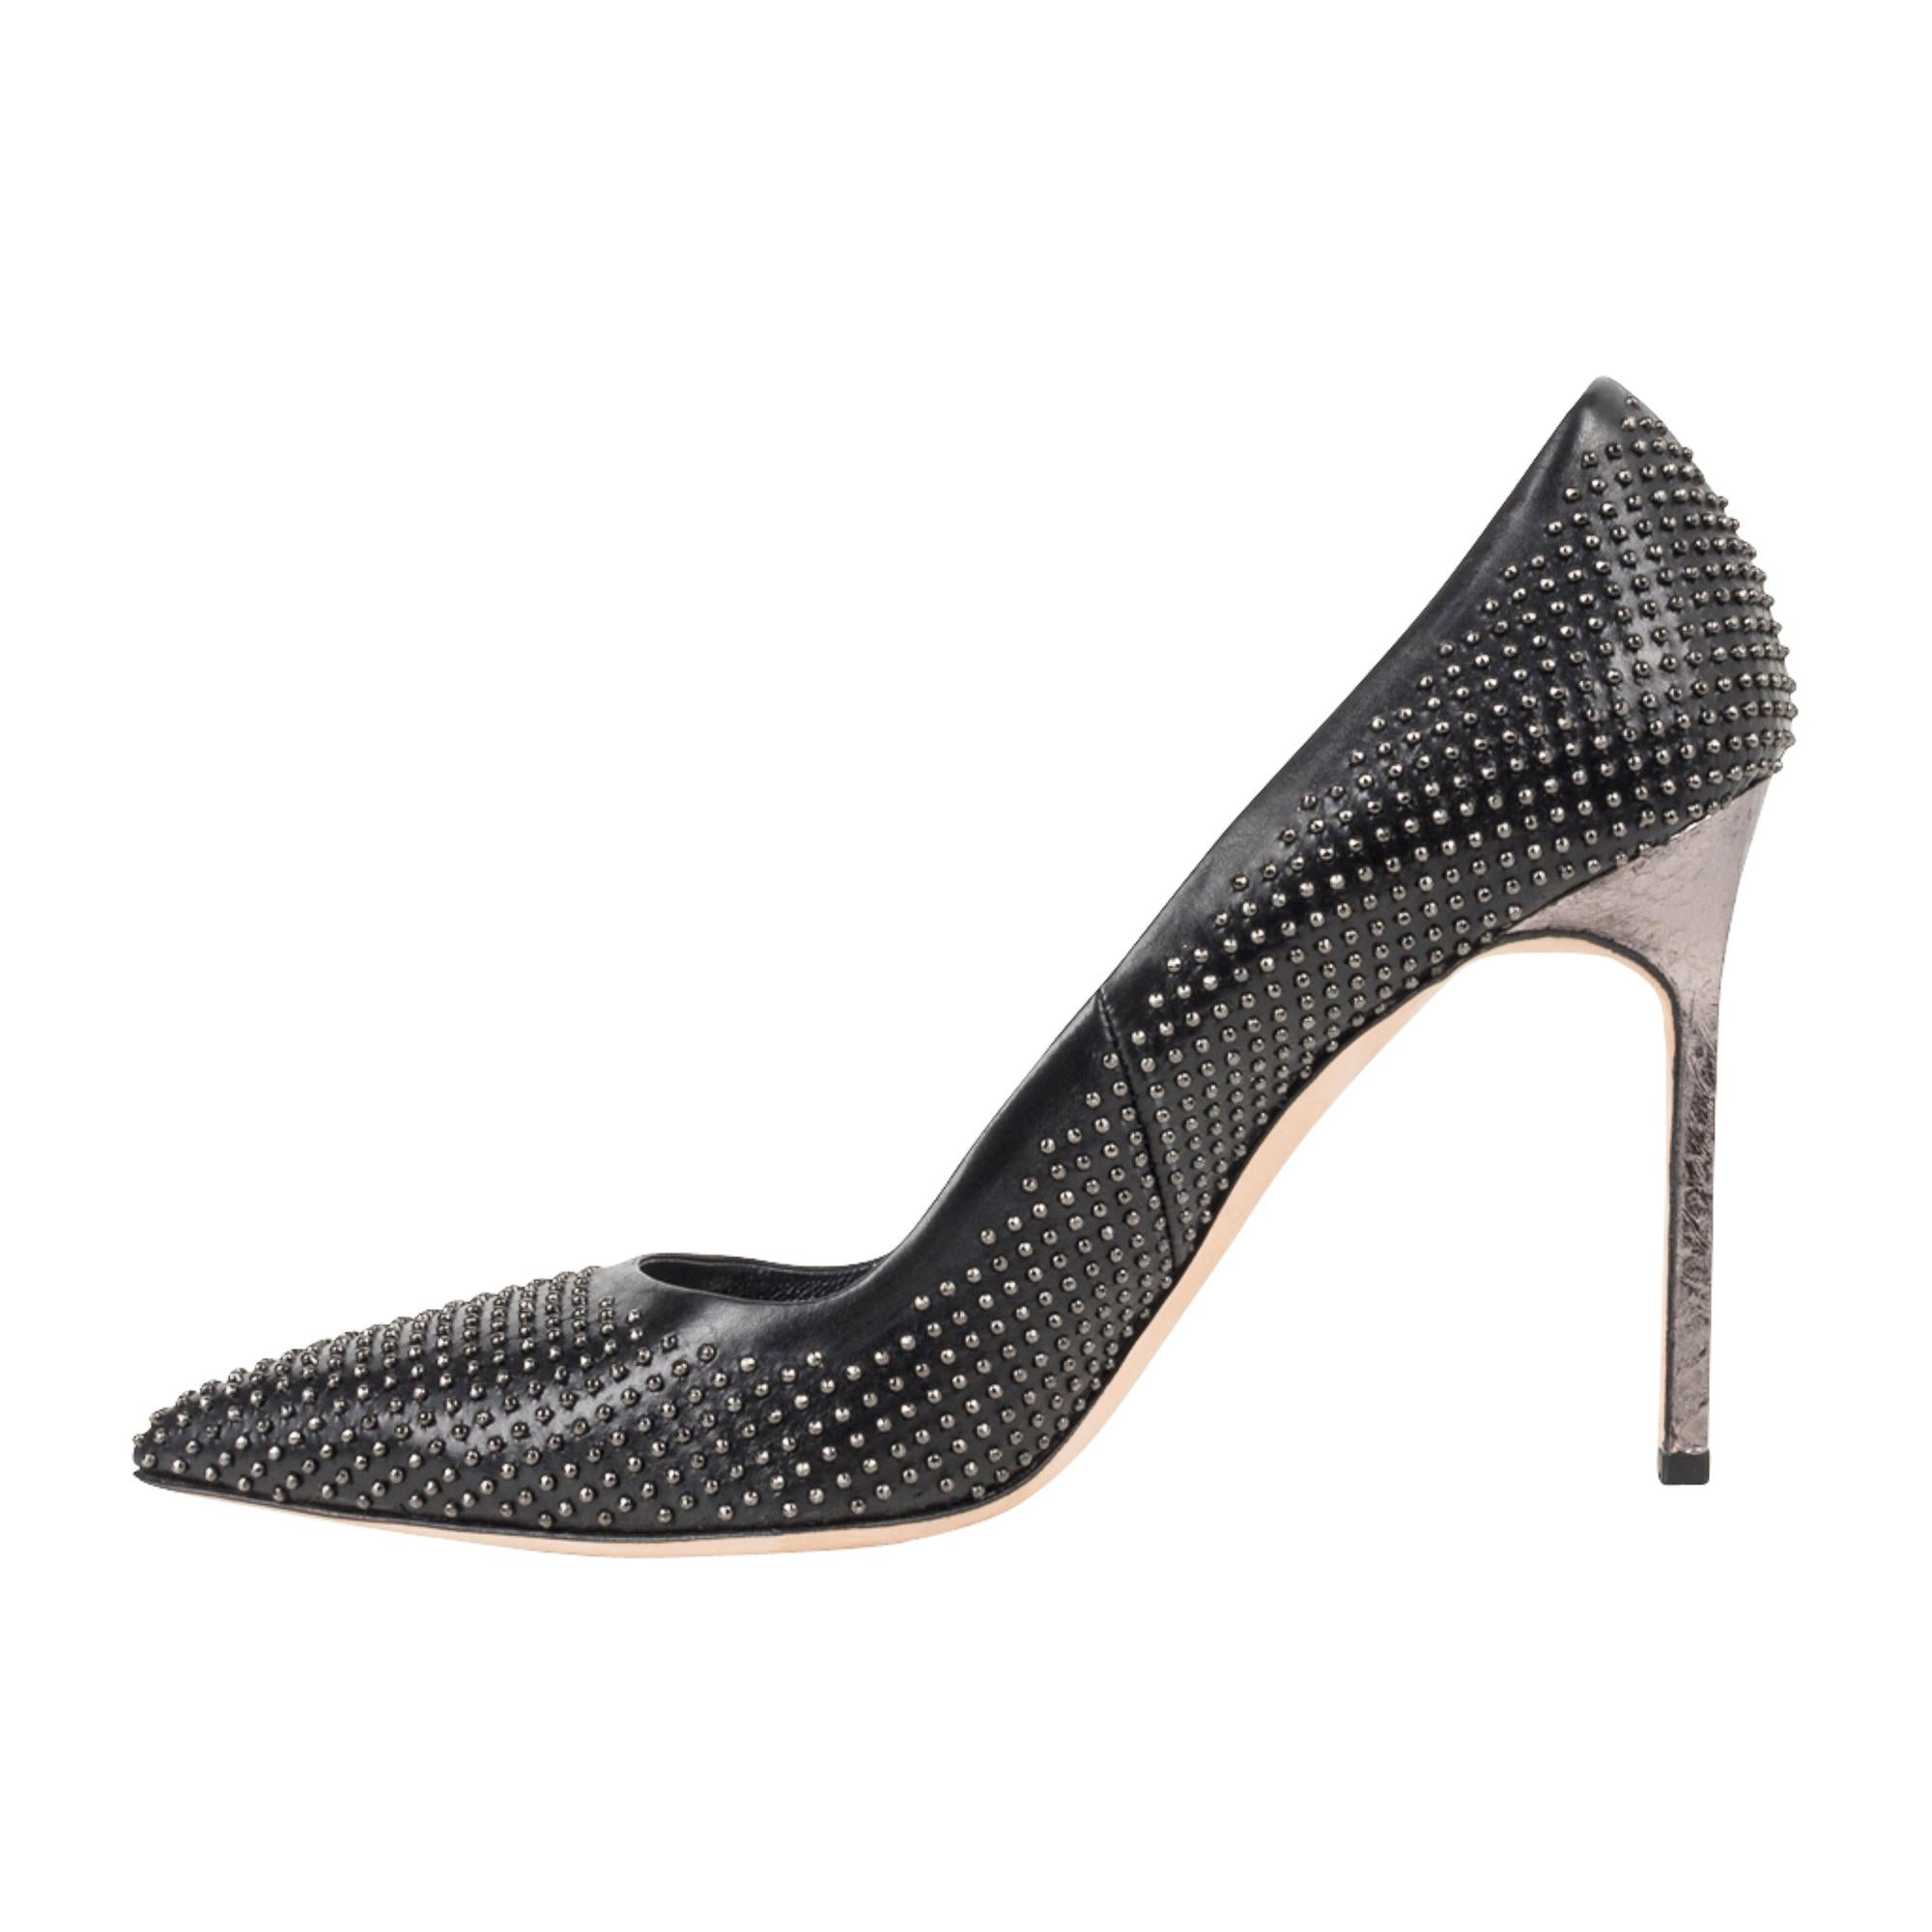 Manolo Blahnik Shoe Black Small Studs Silver Heel 39 / 9 New For Sale ...